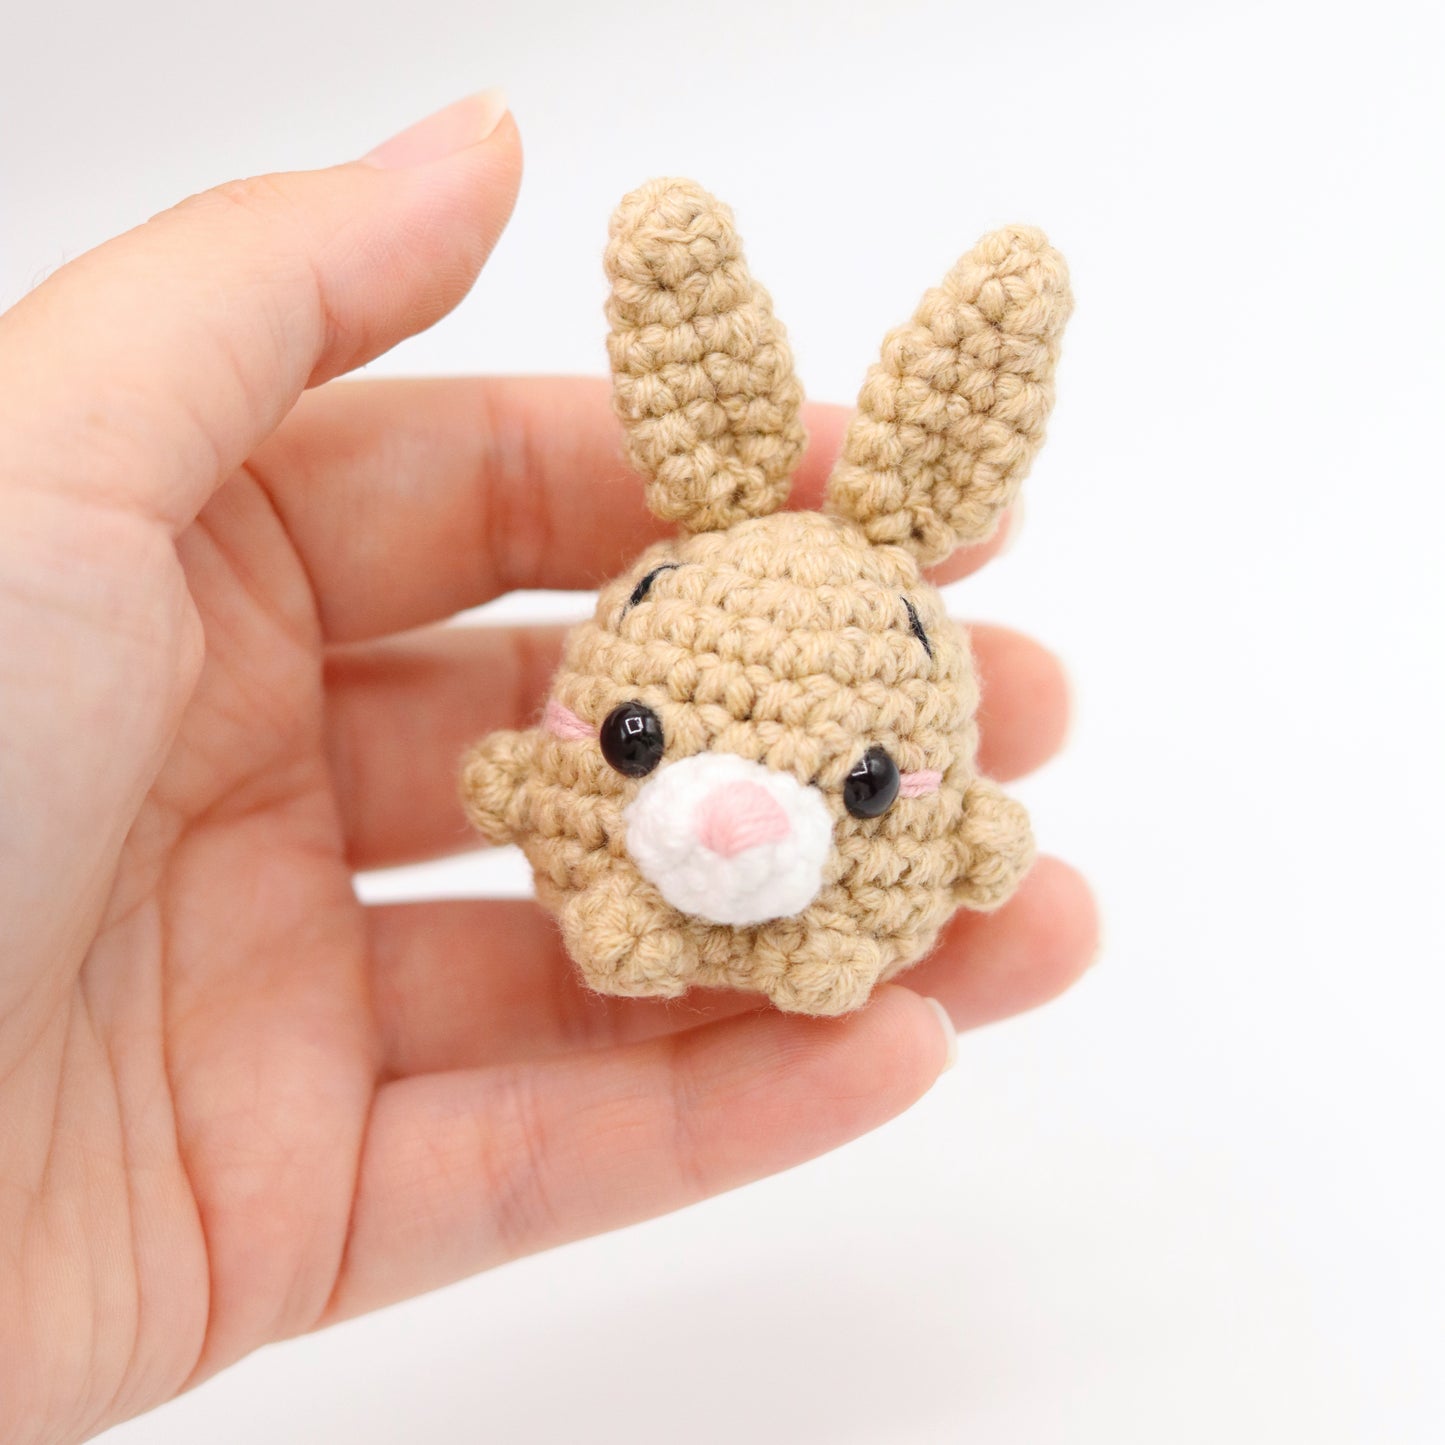 Handmade crochet mini animal toys